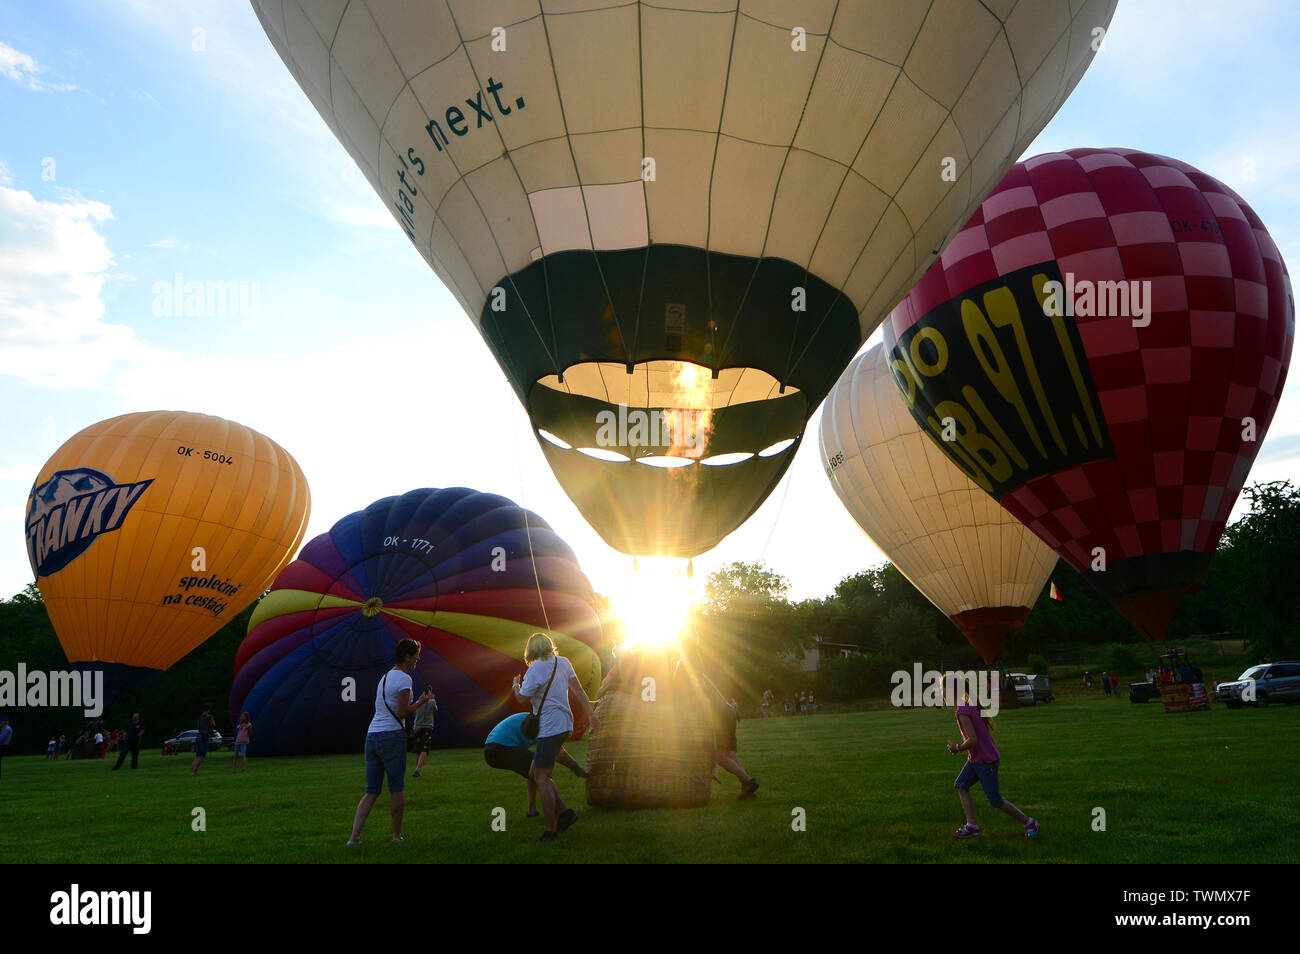 Chrudim, Czech Republic. 21st June, 2019. The 10th Czech Hot-air Balloons  Fiesta ''Balony nad Chrudimi'' will take place in Chrudim (132 kilometers  east of Prague) in the Czech Republic. A Balloonist Vladimir